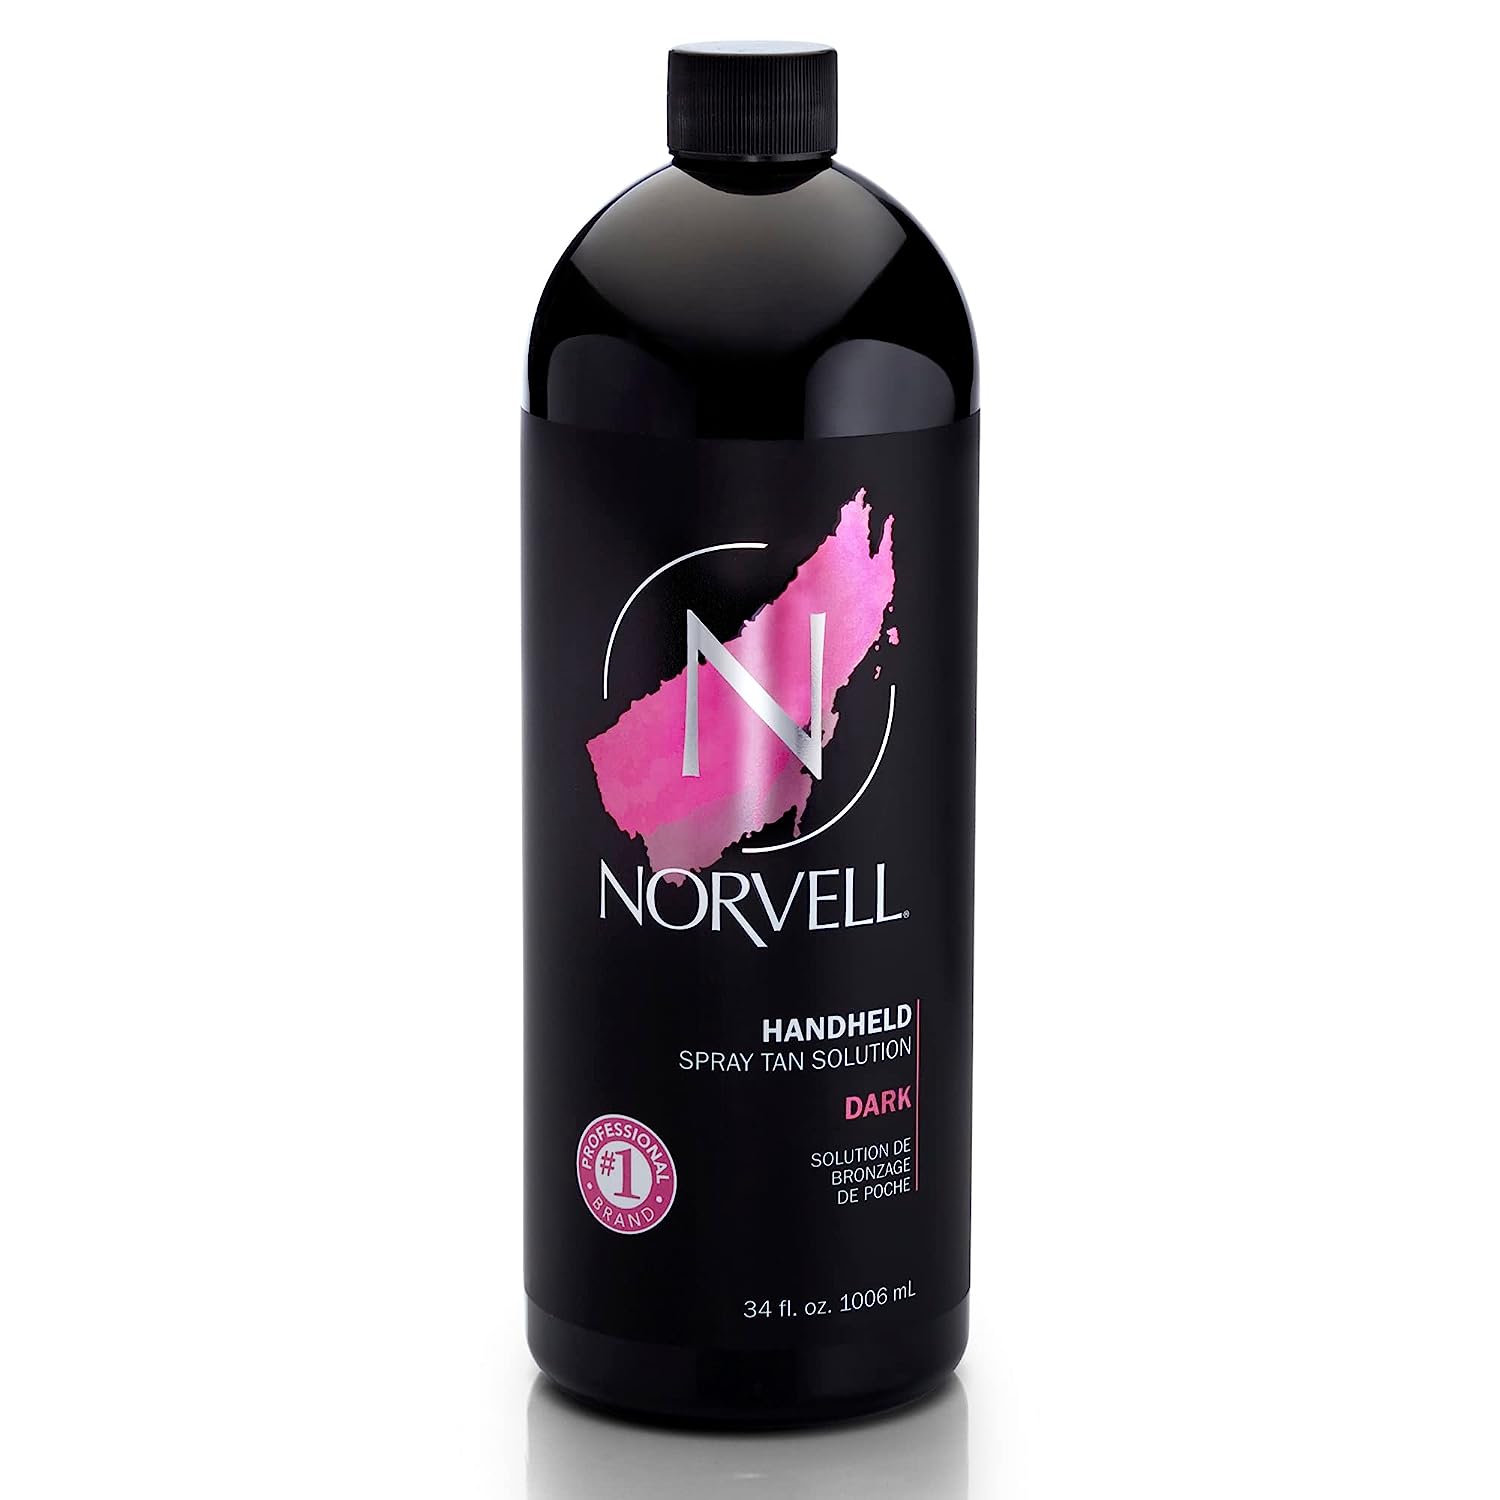 Norvell Premium Sunless Tanning Solution - Dark, 34 fl.oz.